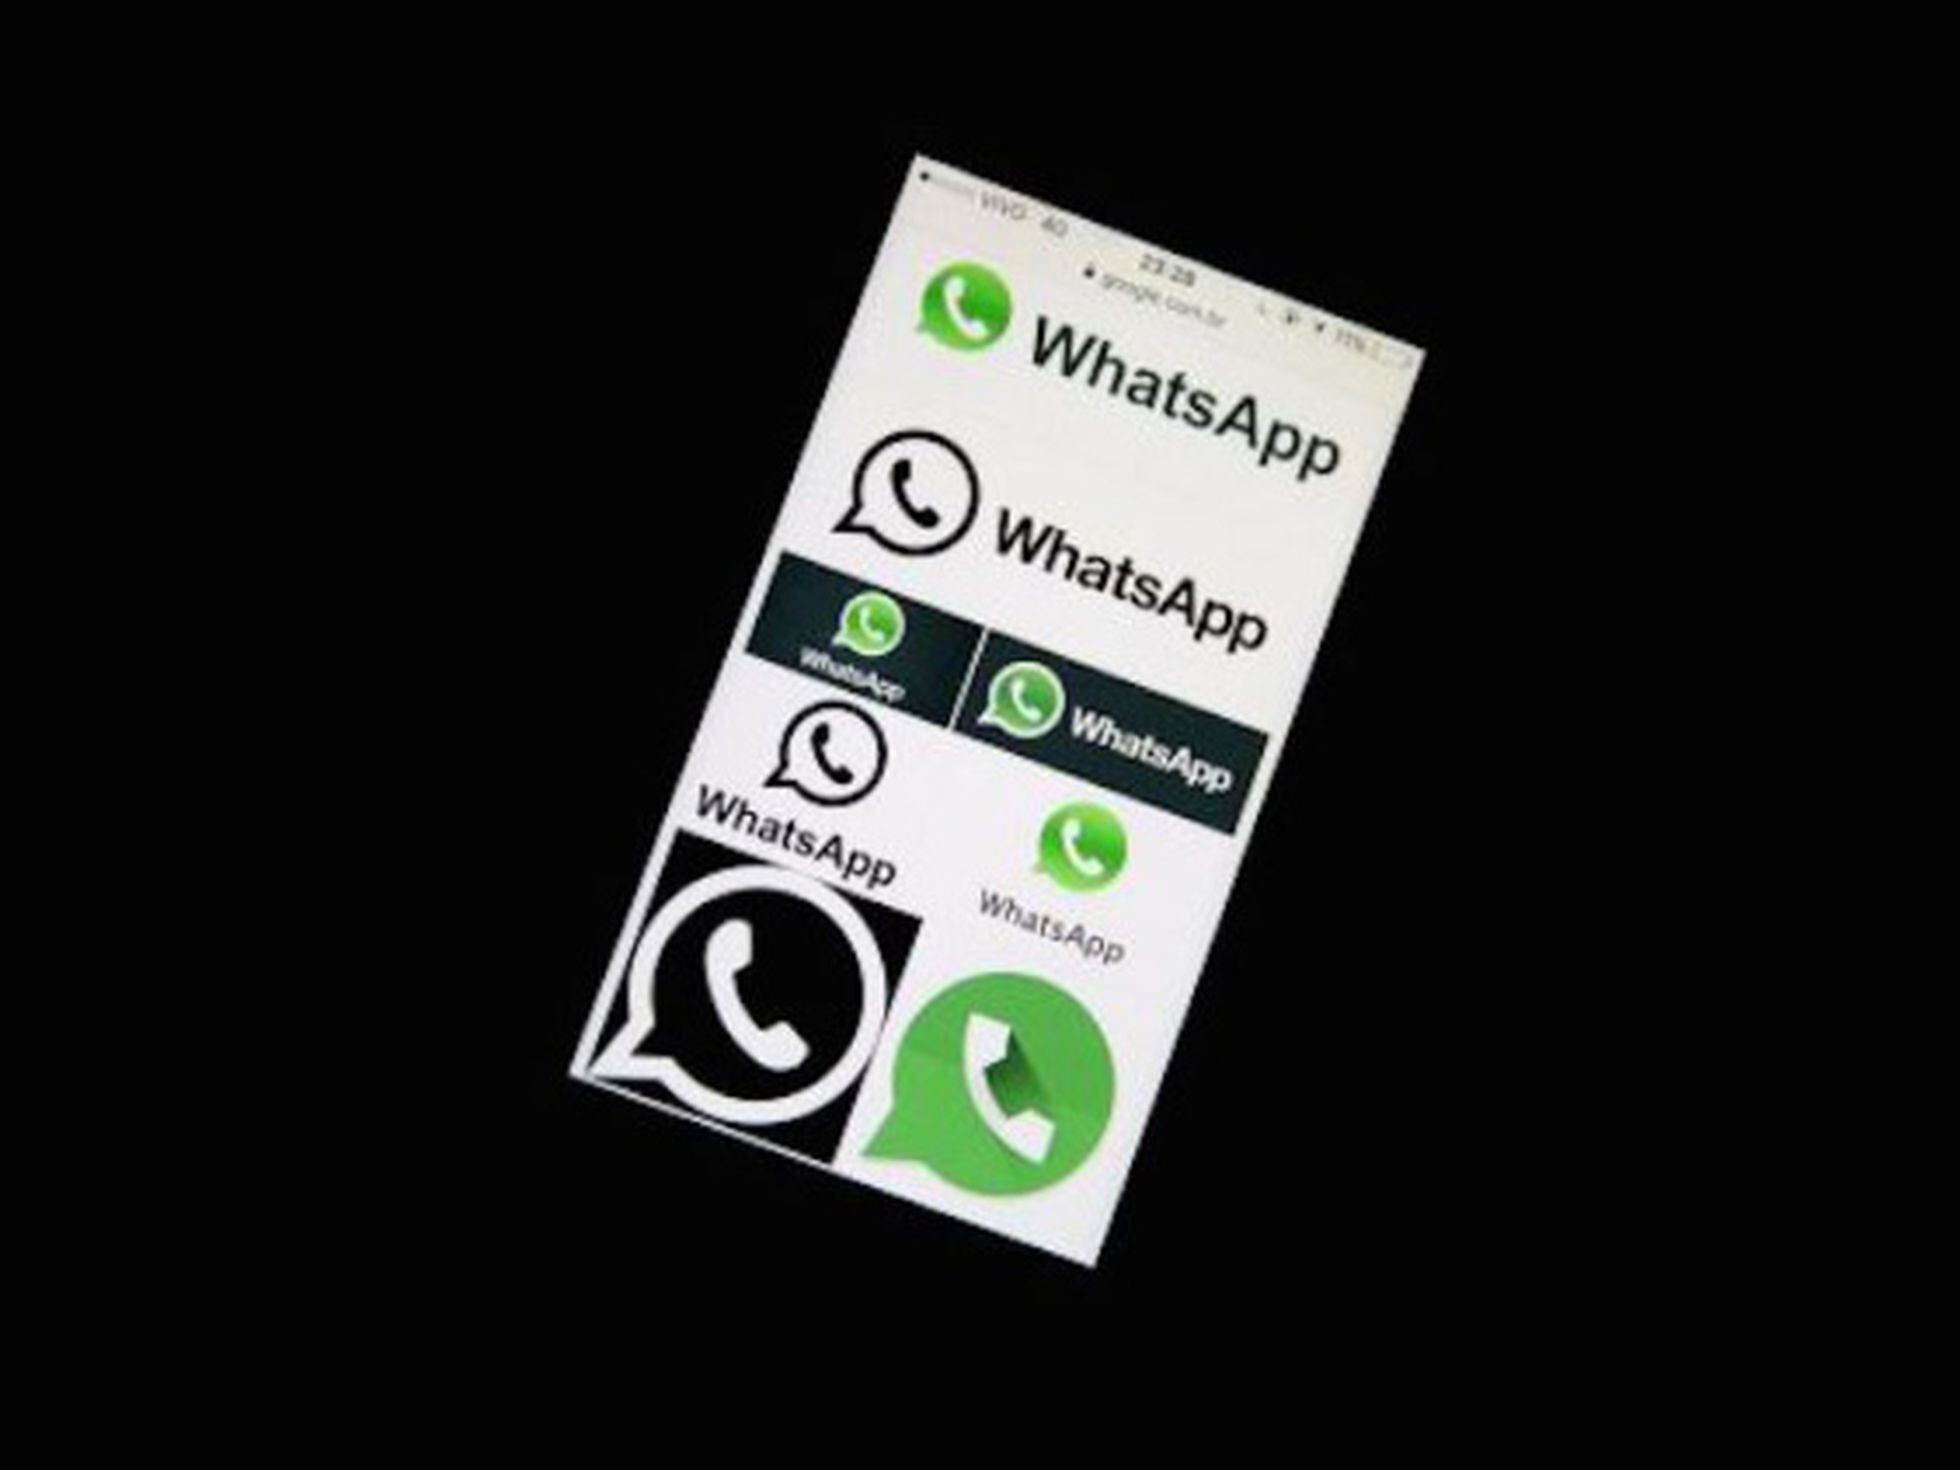 O que significam os tiques azuis, cinzas e duplos no WhatsApp